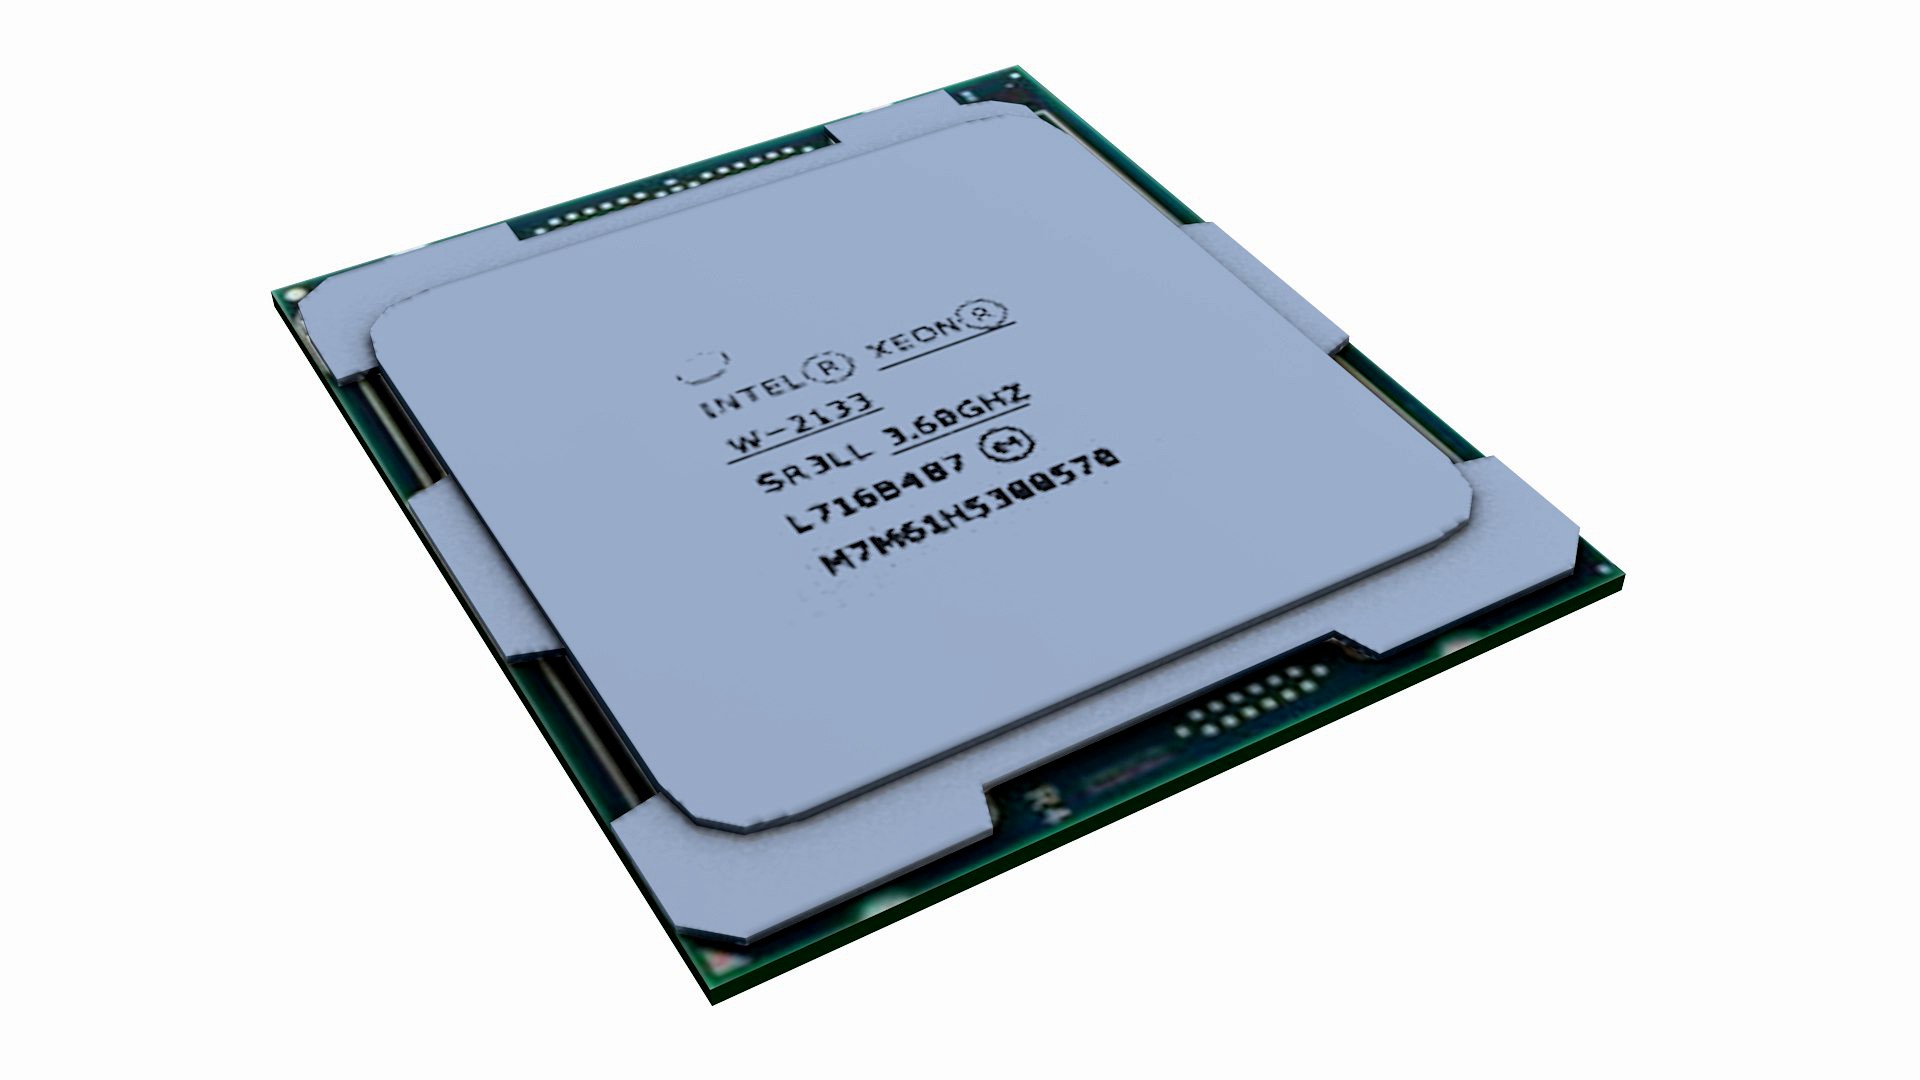 Intel Xeon W-2133